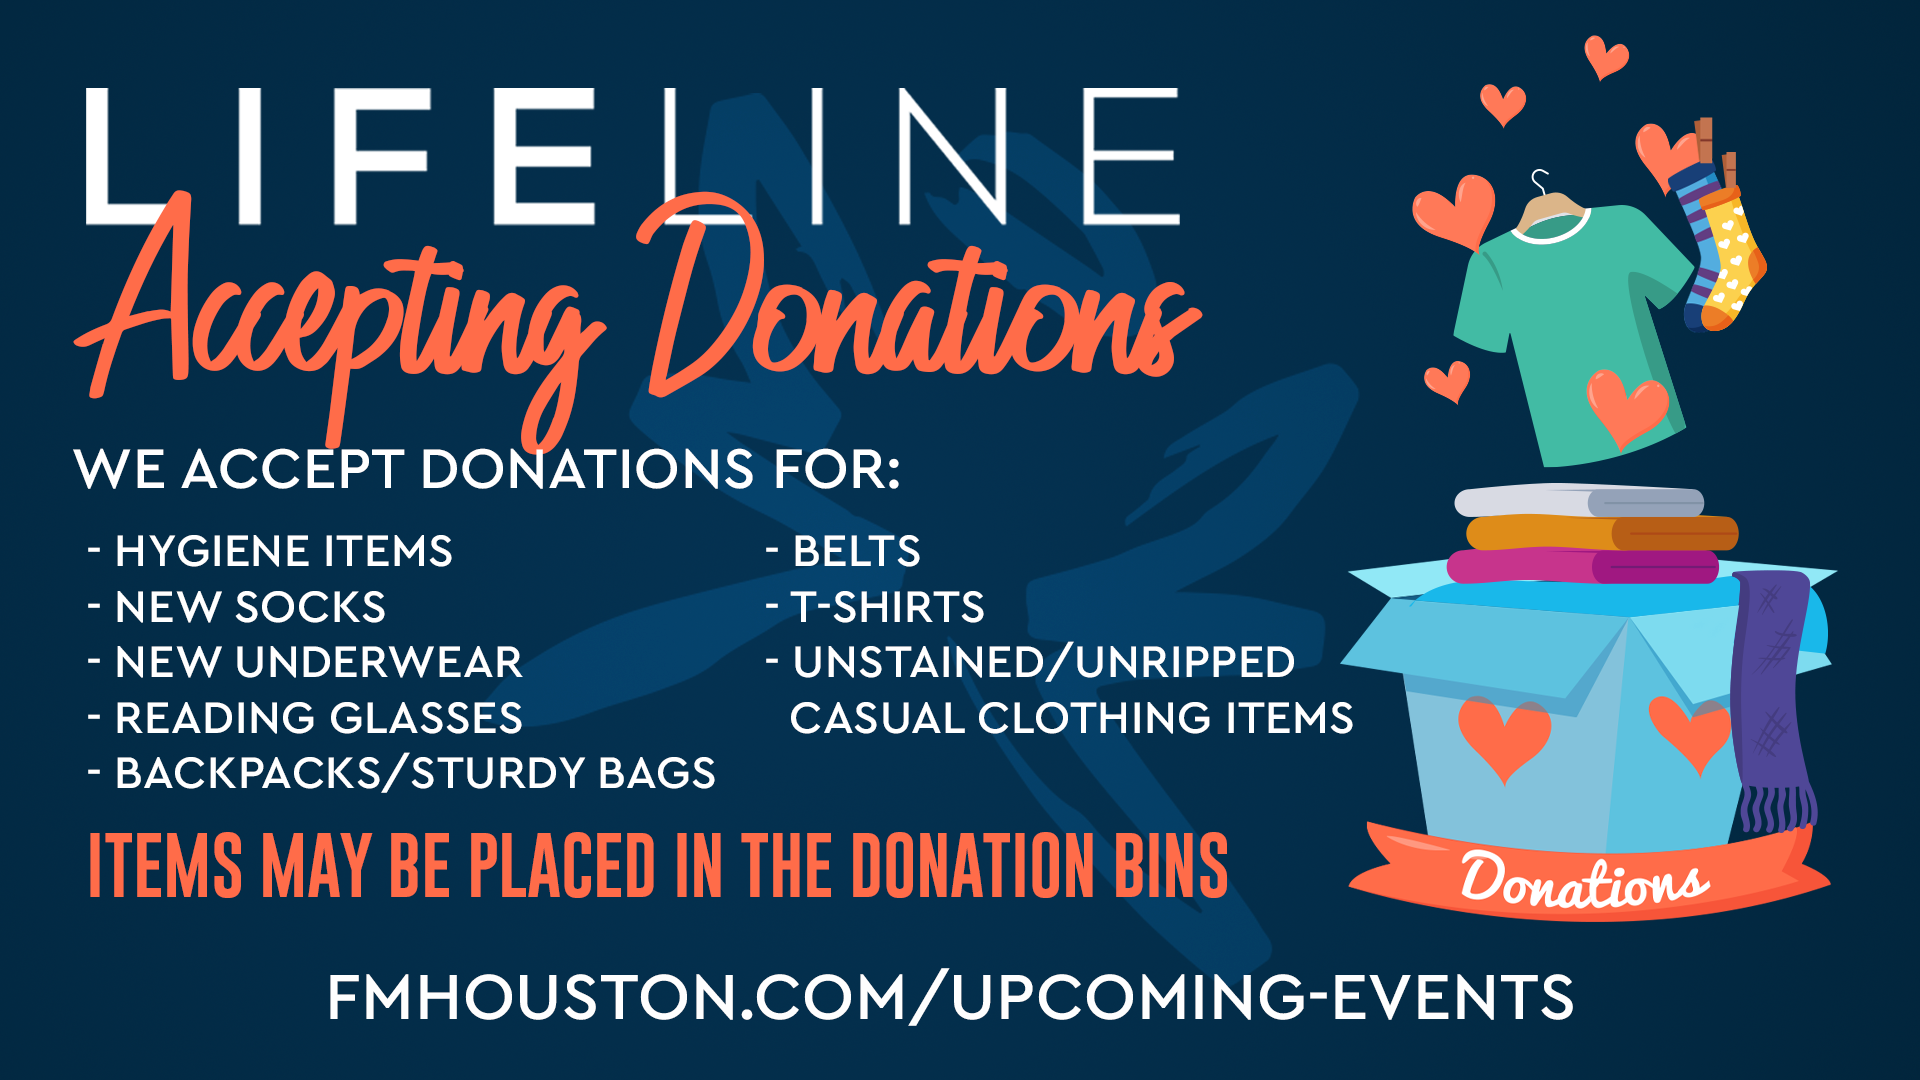 Lifeline Accepting Donations - Live Service Slide